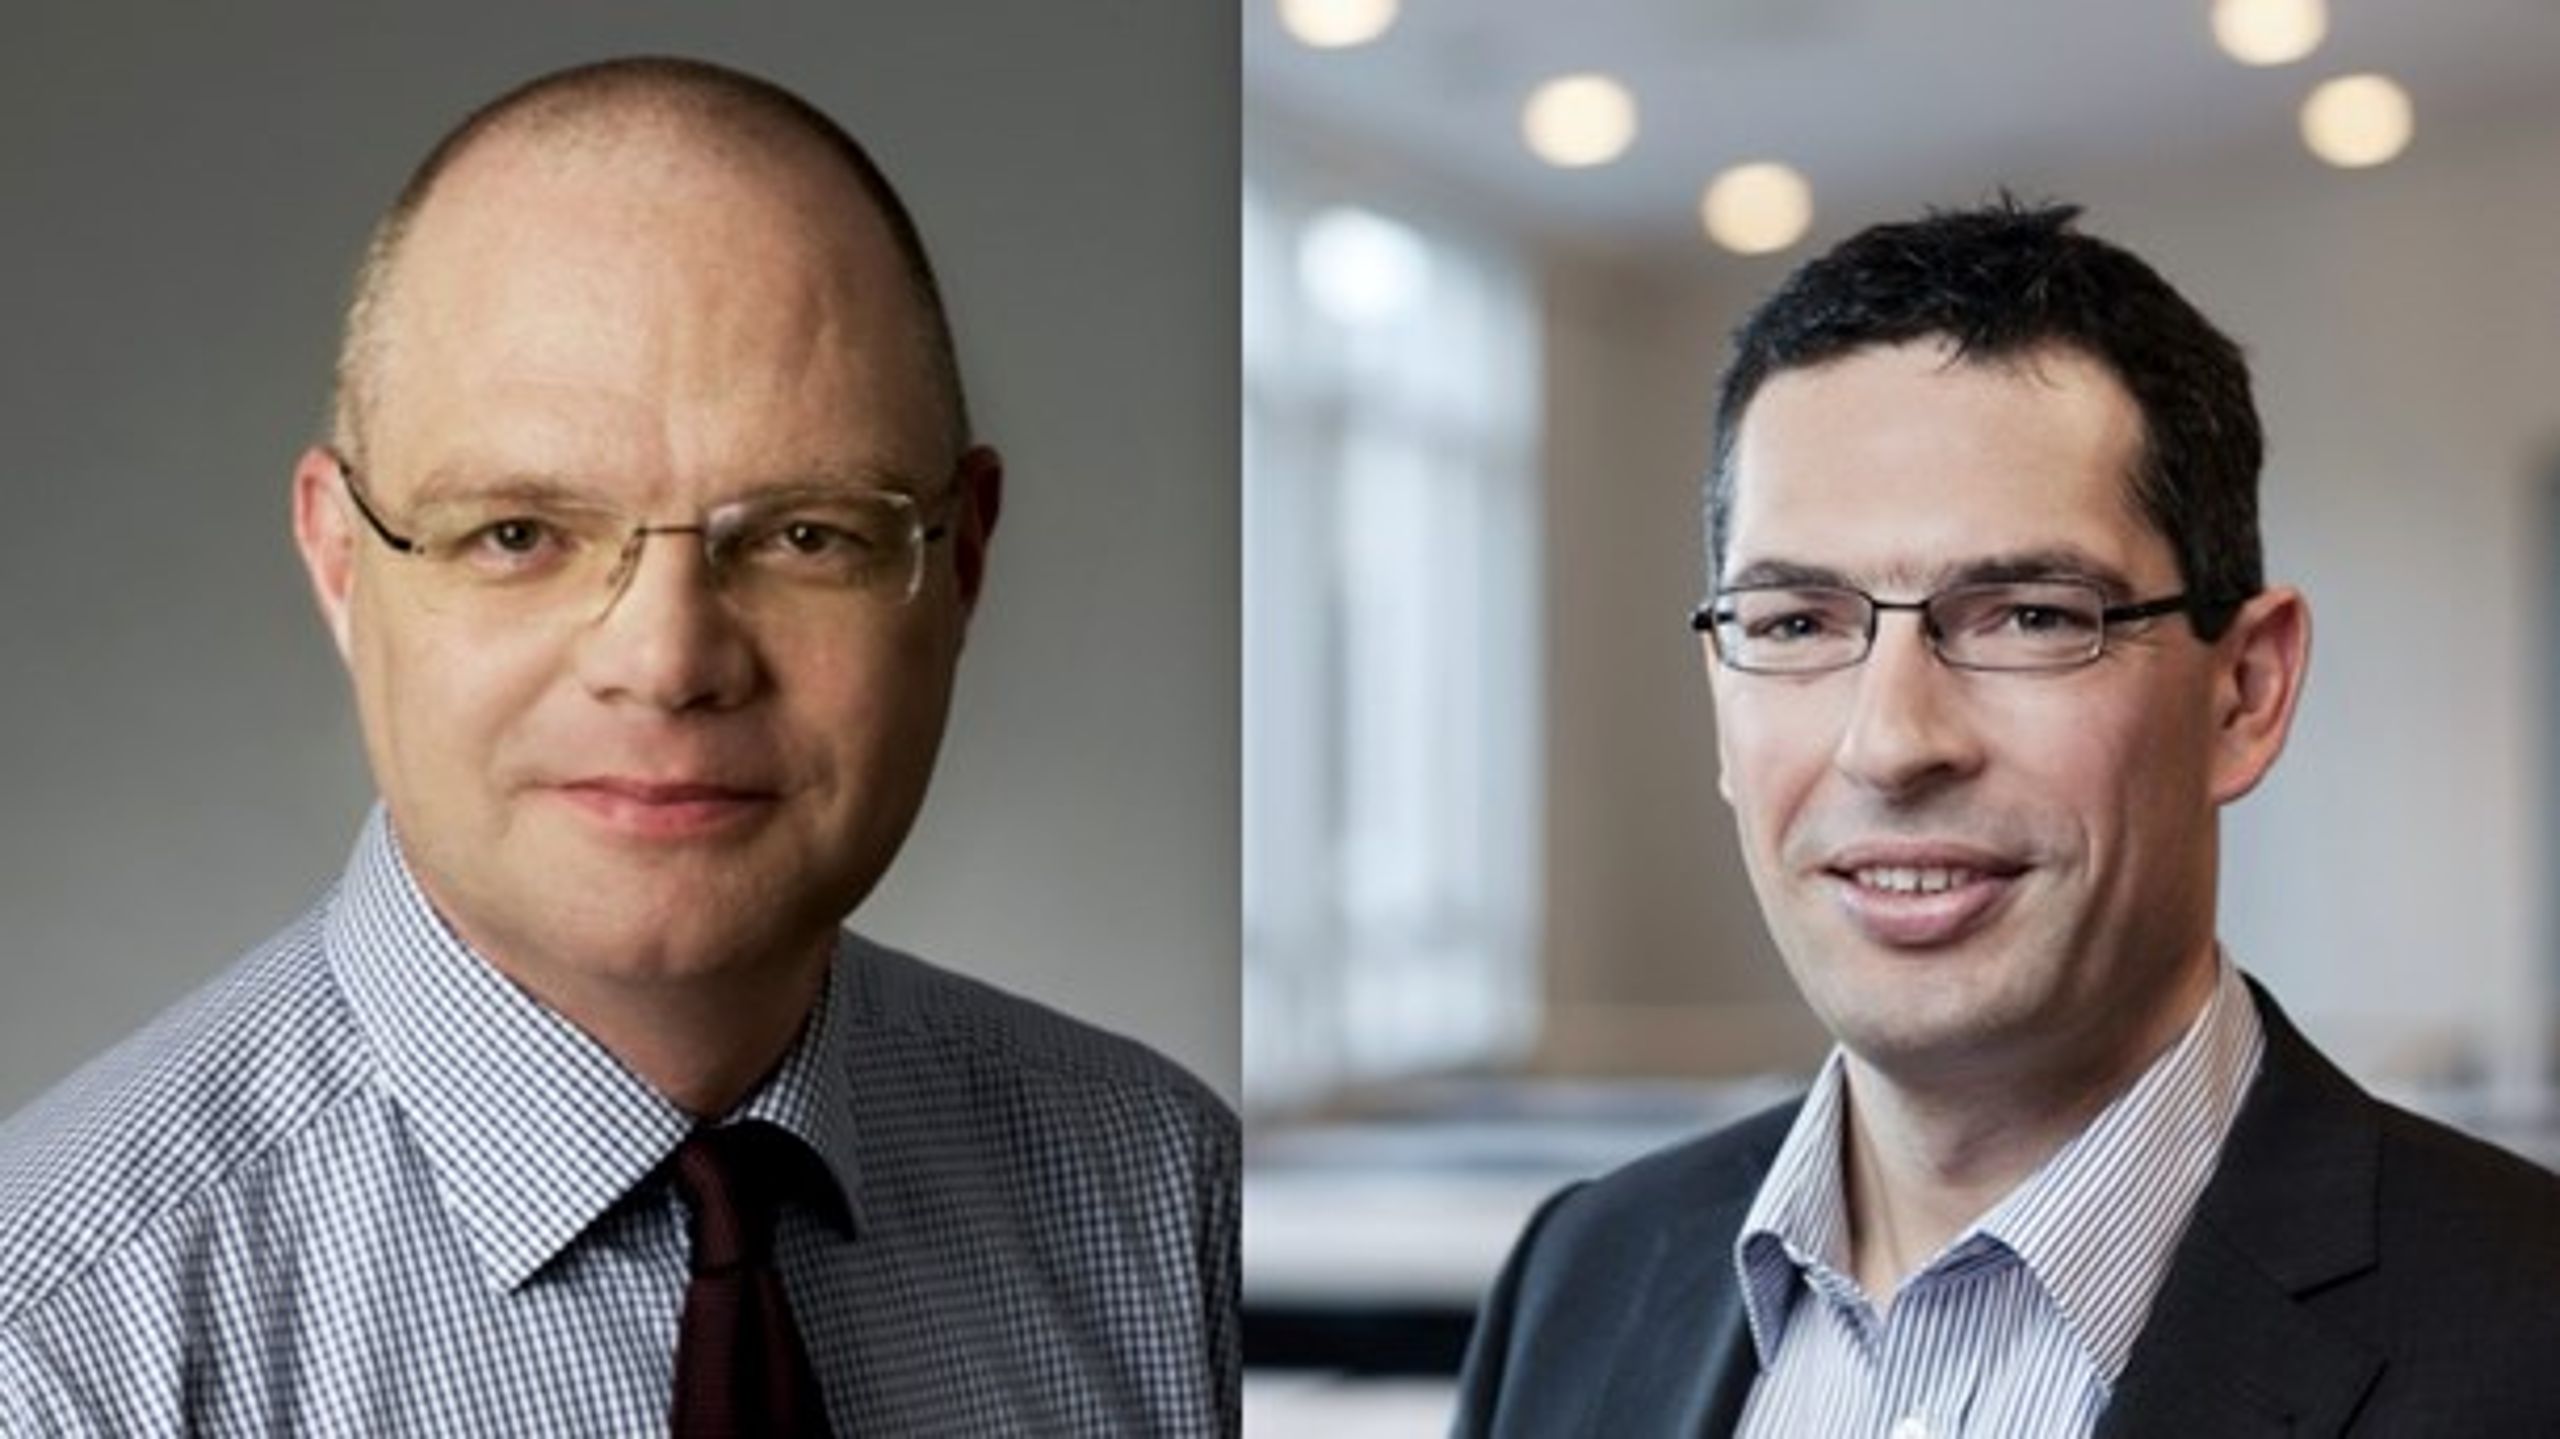 Hans Müller Pedersen (til venstre) skal lede&nbsp;Styrelsen for Forskning og Uddannelse, mens Nikolaj Veje er ny direktør for&nbsp;Styrelsen for Institutioner og Uddannelsesstøtte.